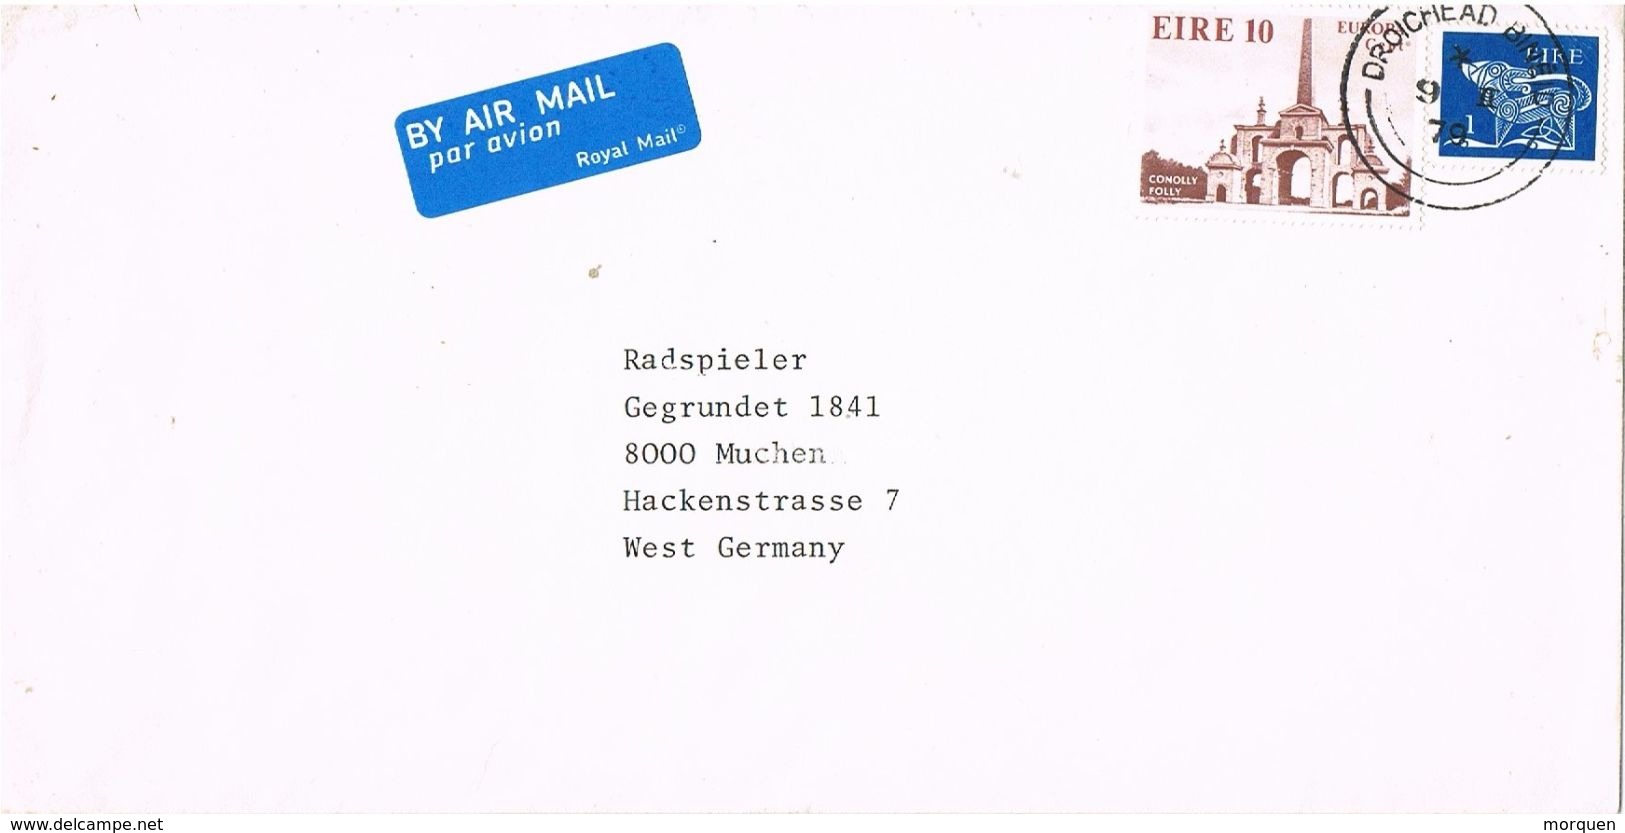 26987. Carta Aerea DROICHEAD BINEID (Irlanda) Eire 1979 - Lettres & Documents